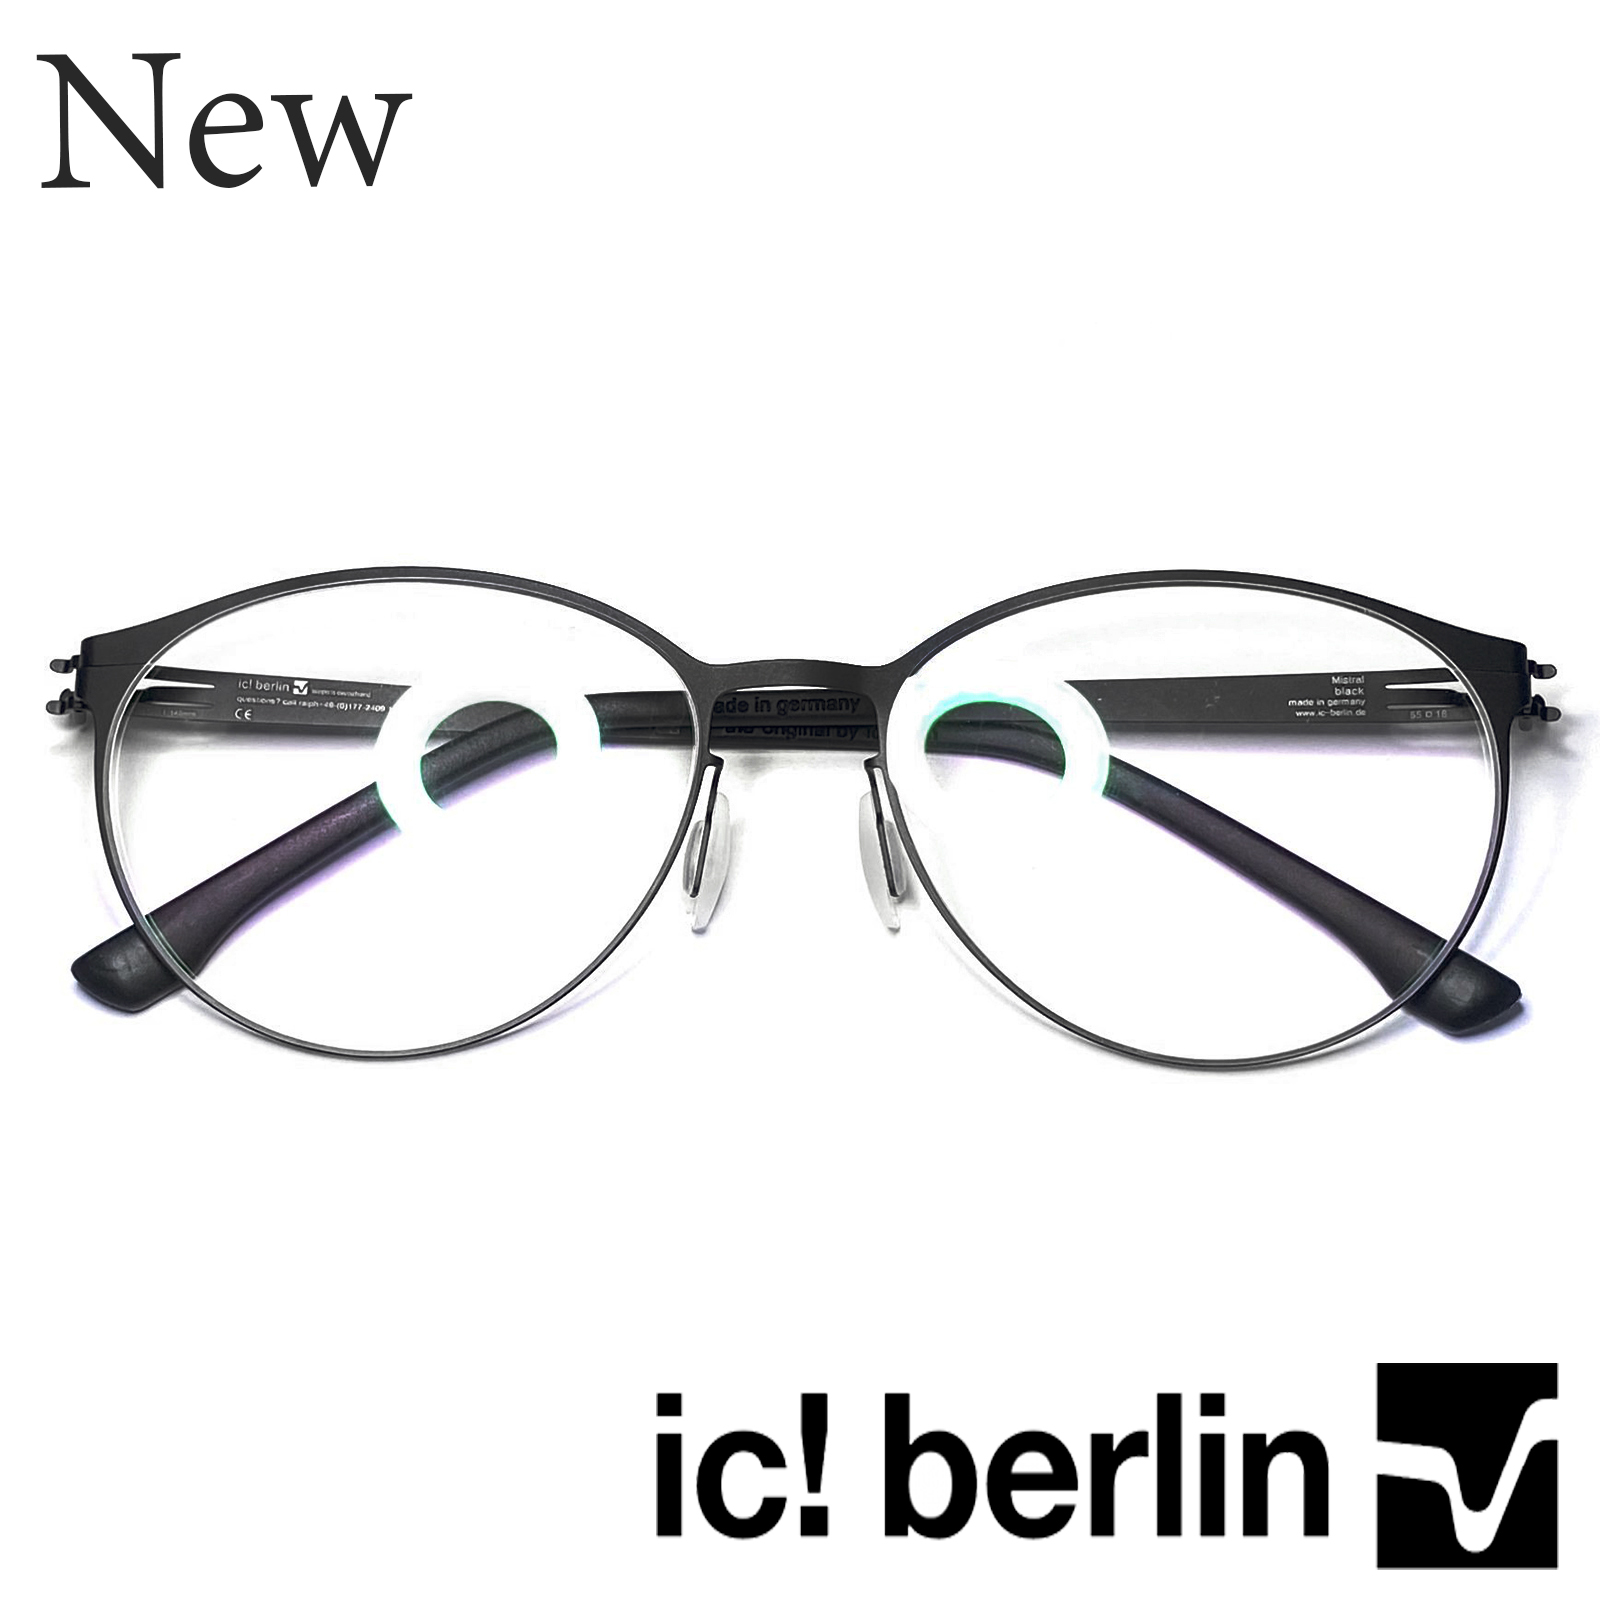 IC กรอบแว่นตา สำหรับตัดเลนส์ แว่นตาชาย หญิง Fashion รุ่น Mistral 44 สีดำ กรอบเต็ม ทรงรี ขาไม่ใช้น็อต ถอดได้ วัสดุ Stainless Steel น้ำหนักเบา